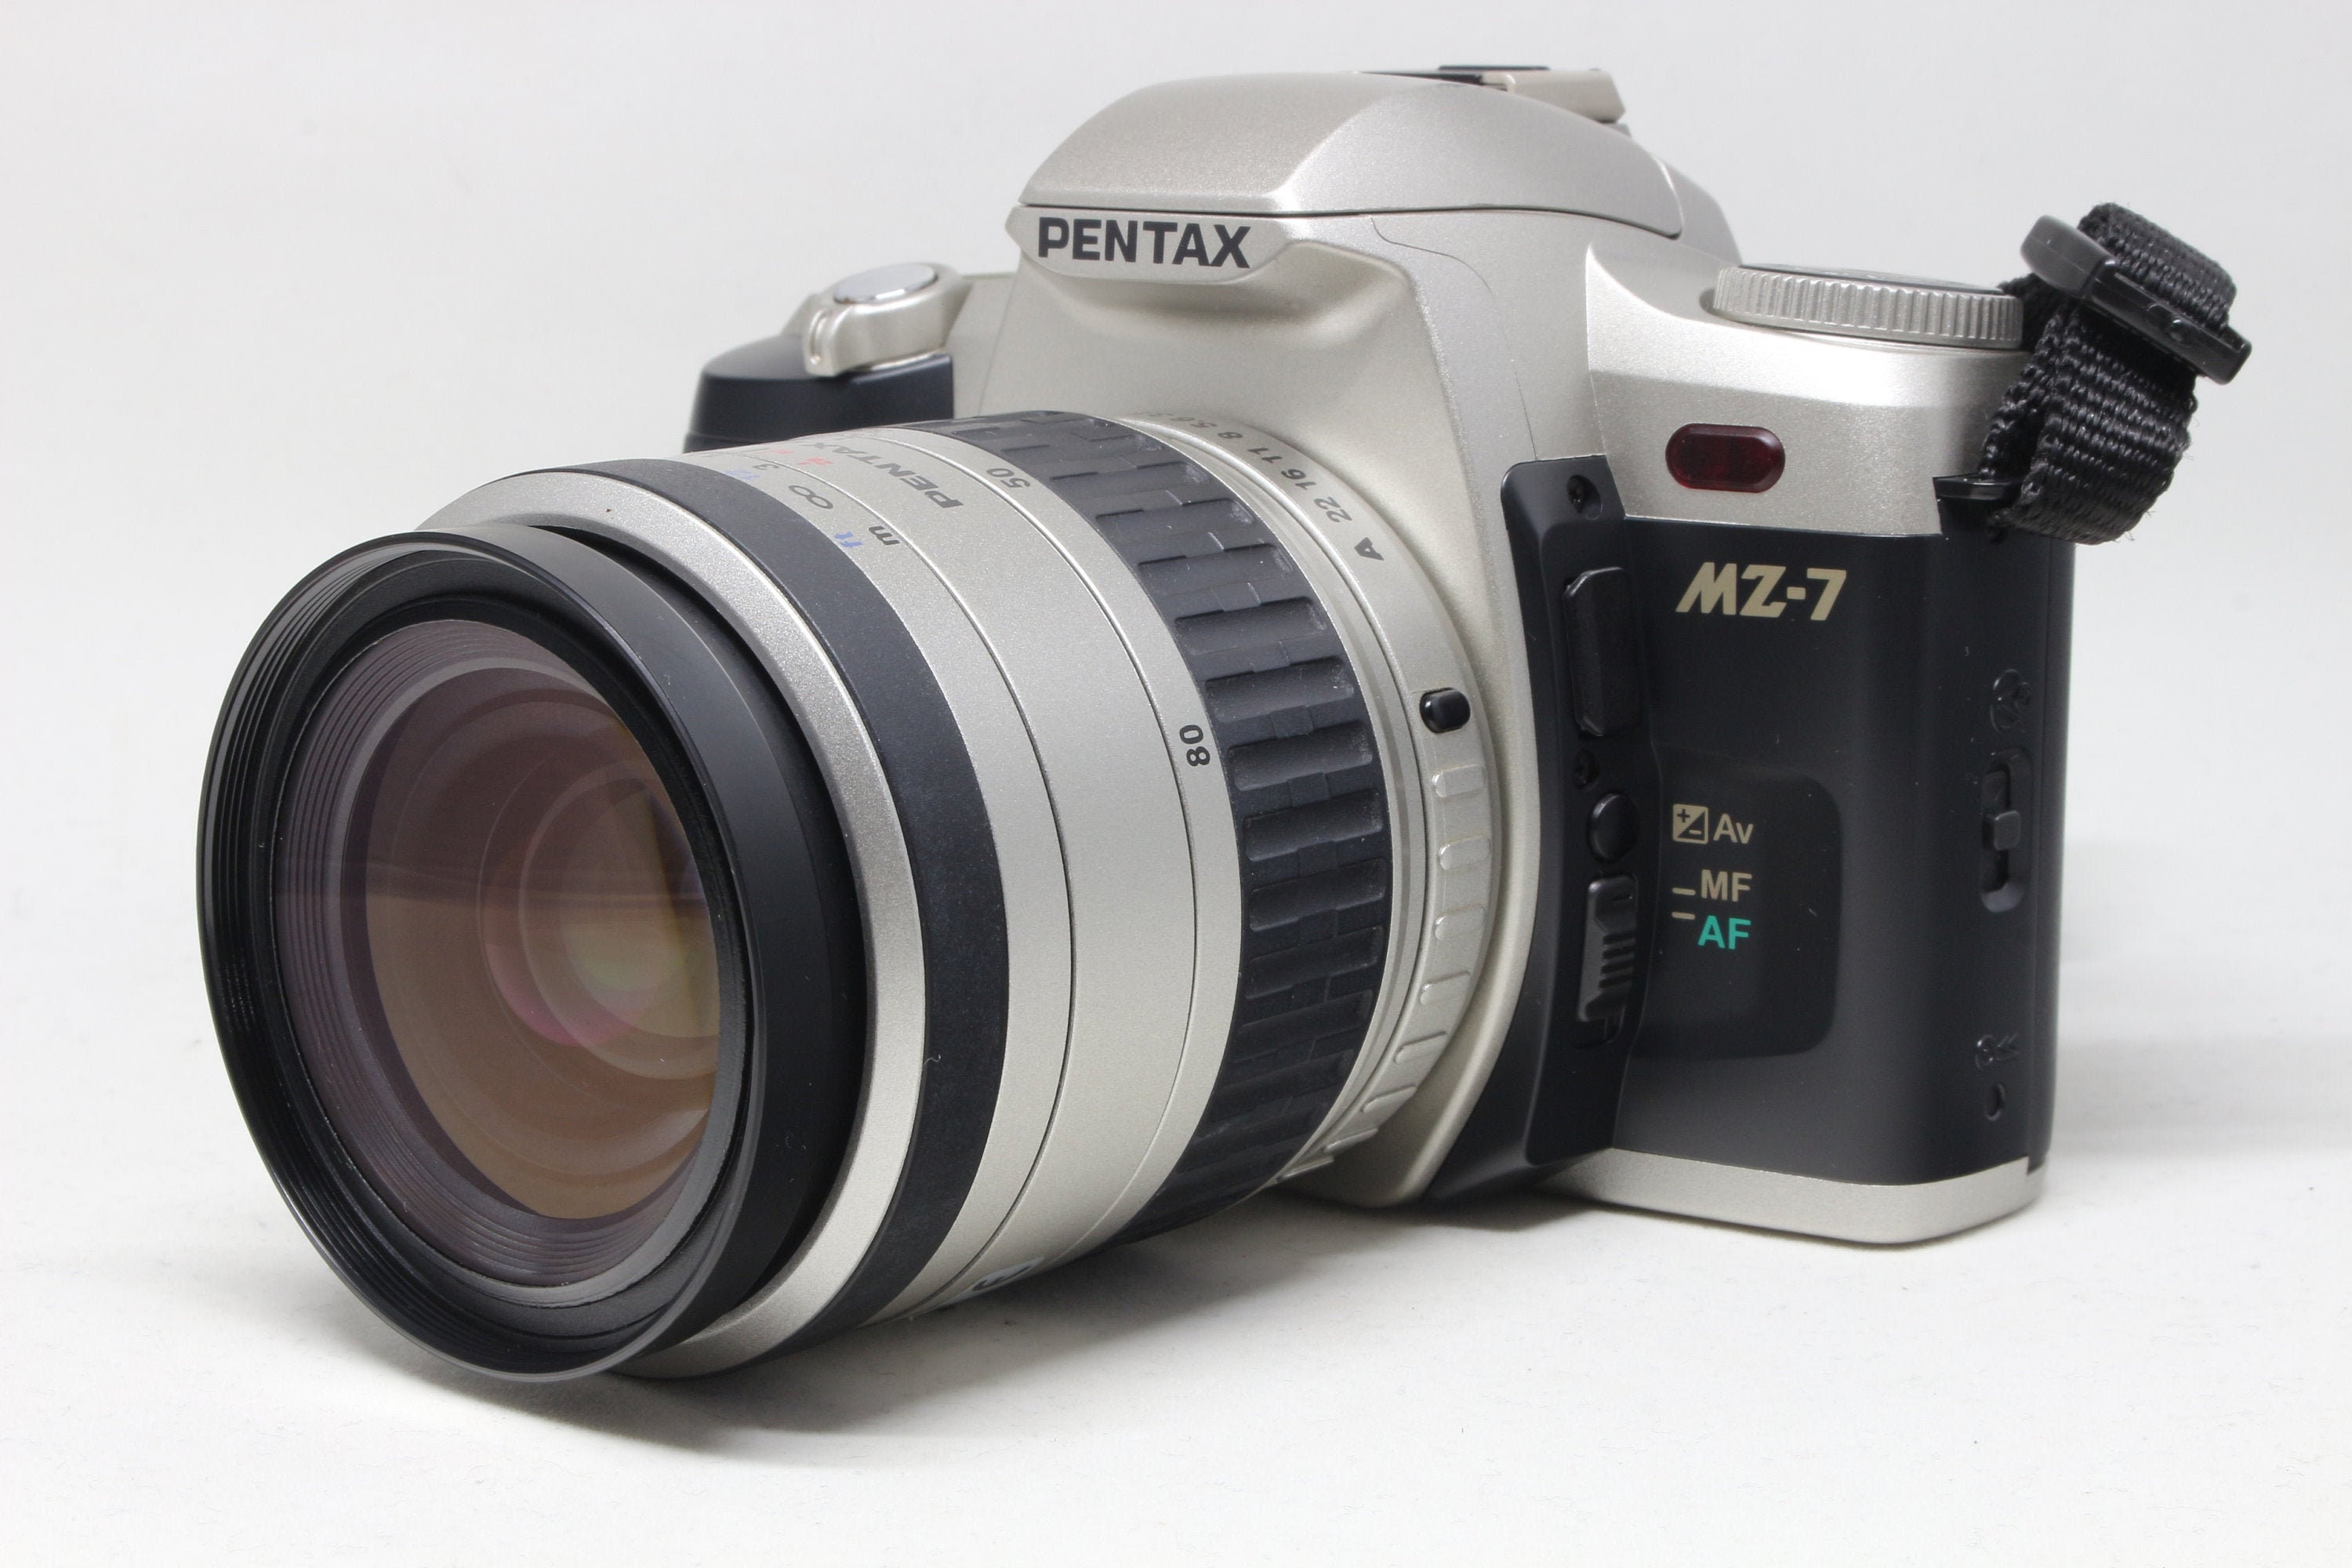 PENTAX MZ-7 Date ZX-7 Date 35mm Film Camera Kit Film Etsy India